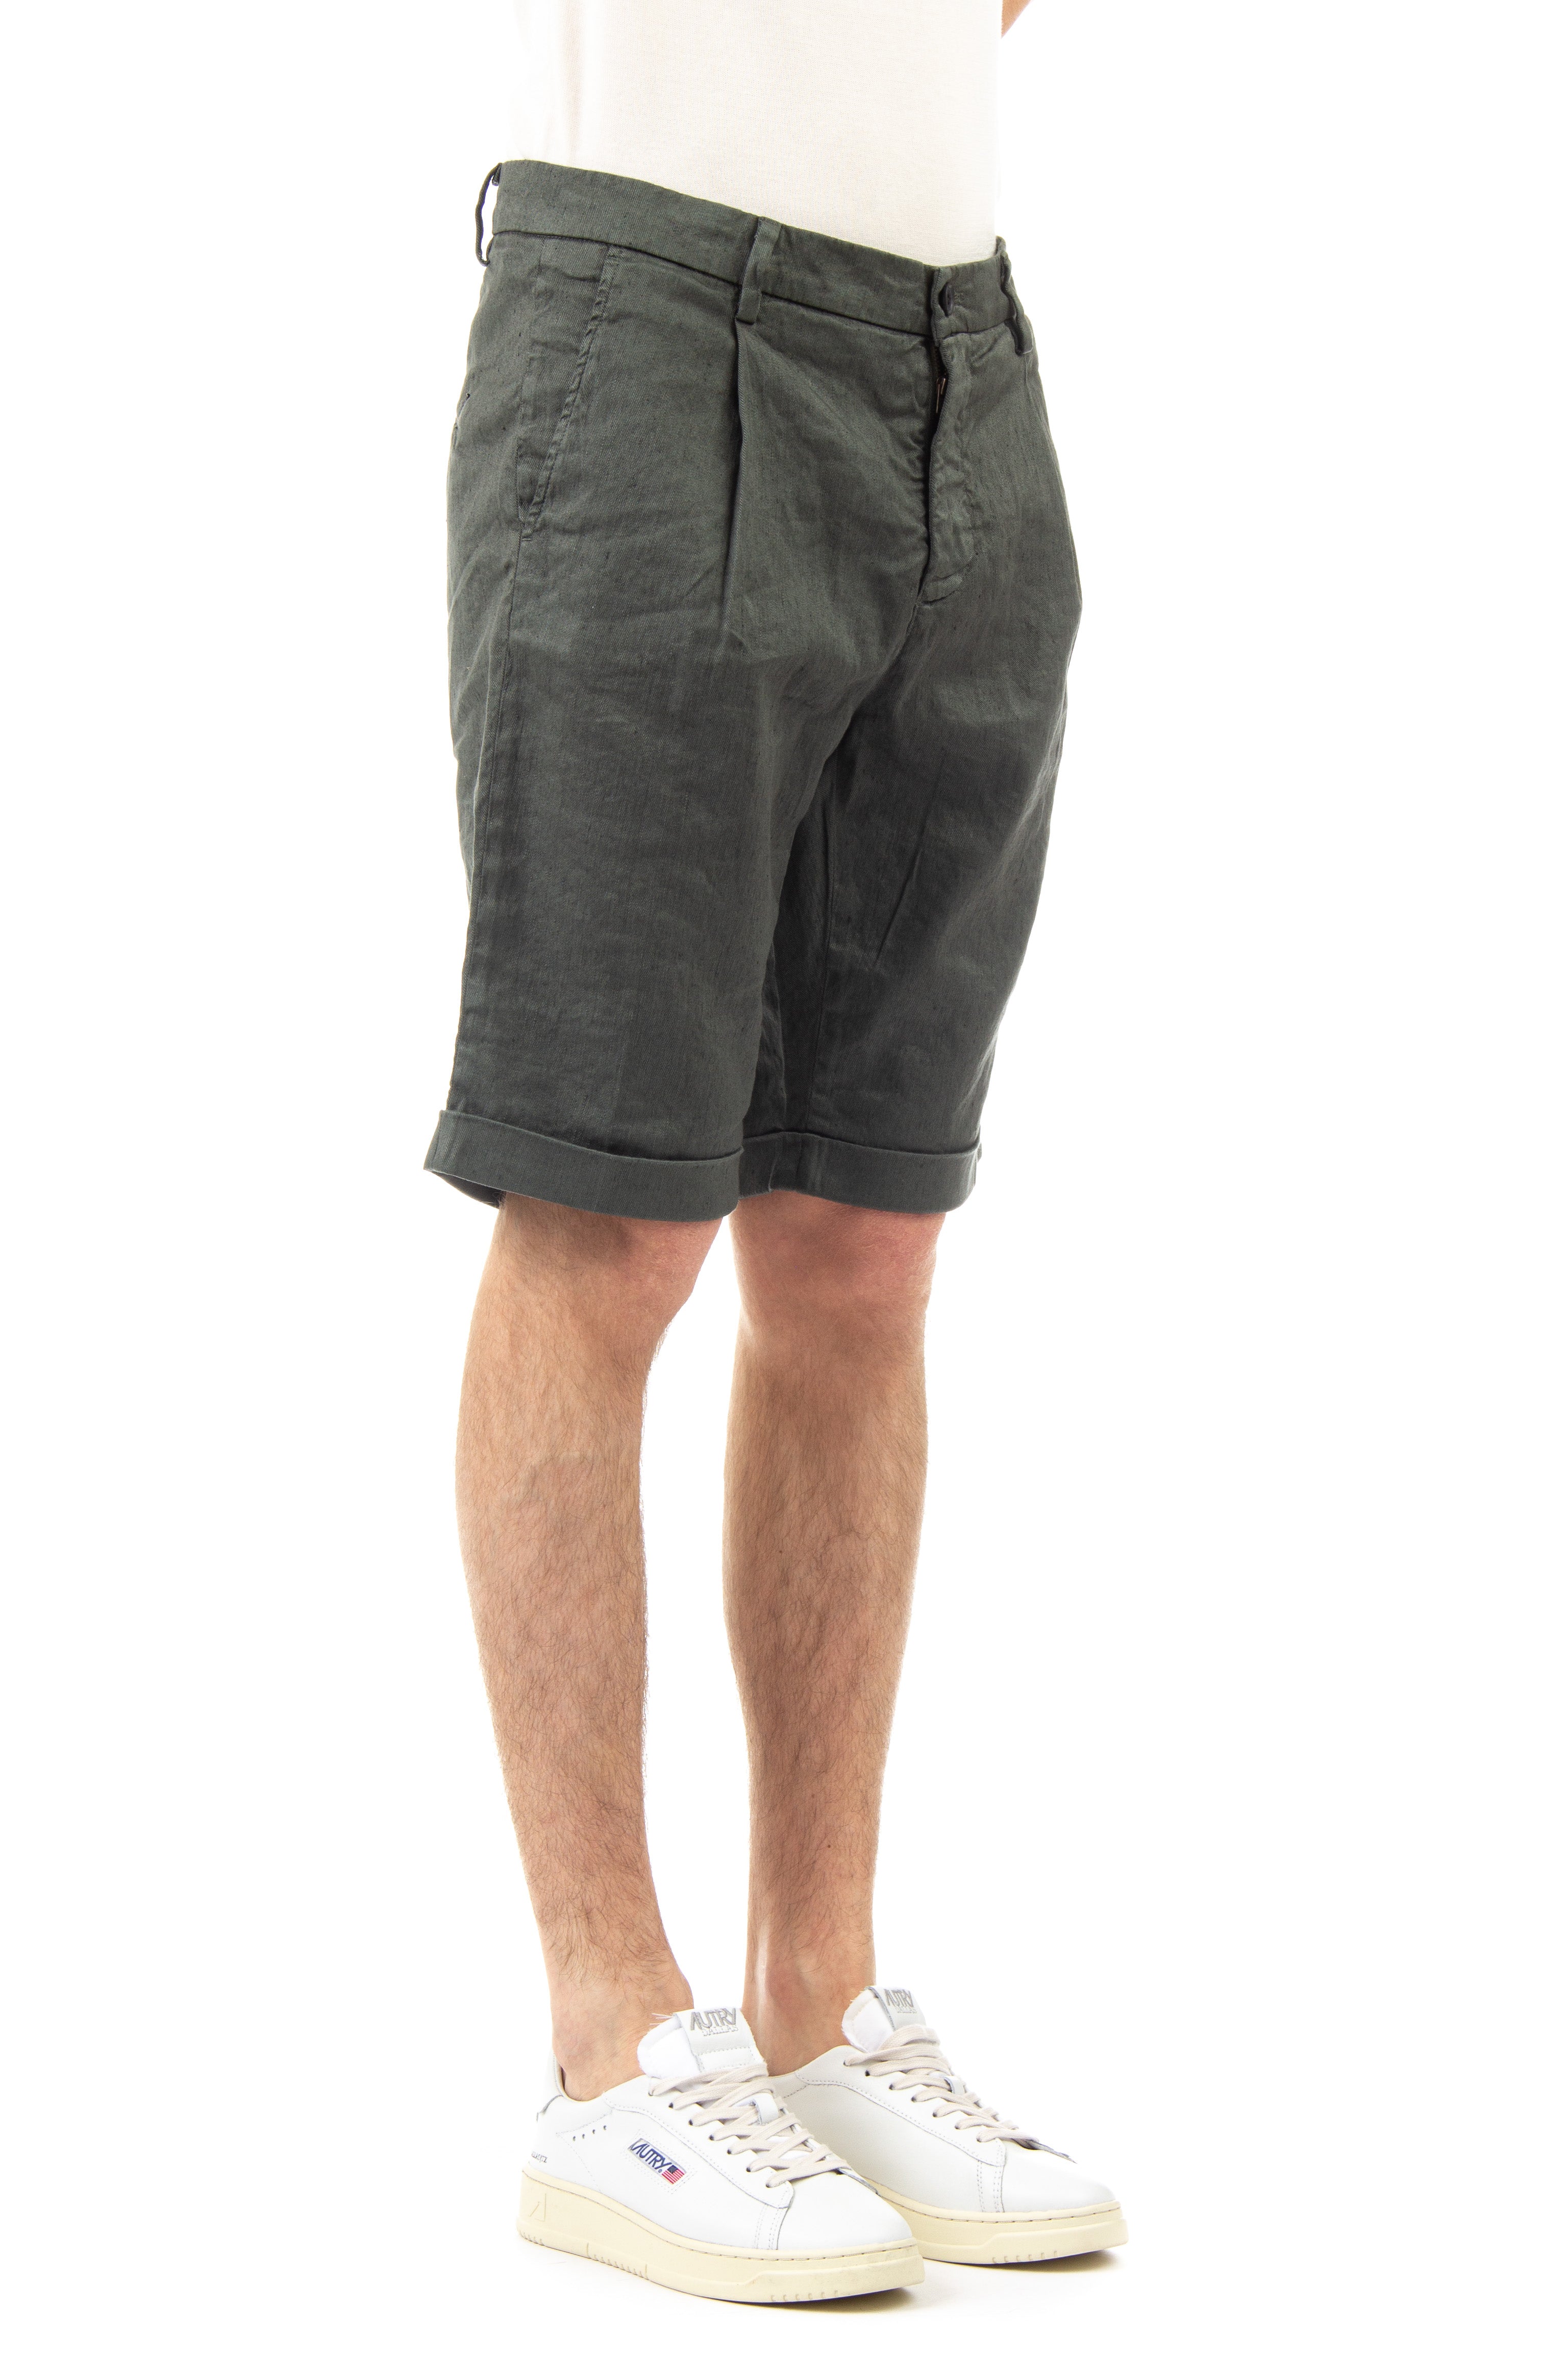 Amalfi model linen-cotton Bermuda shorts